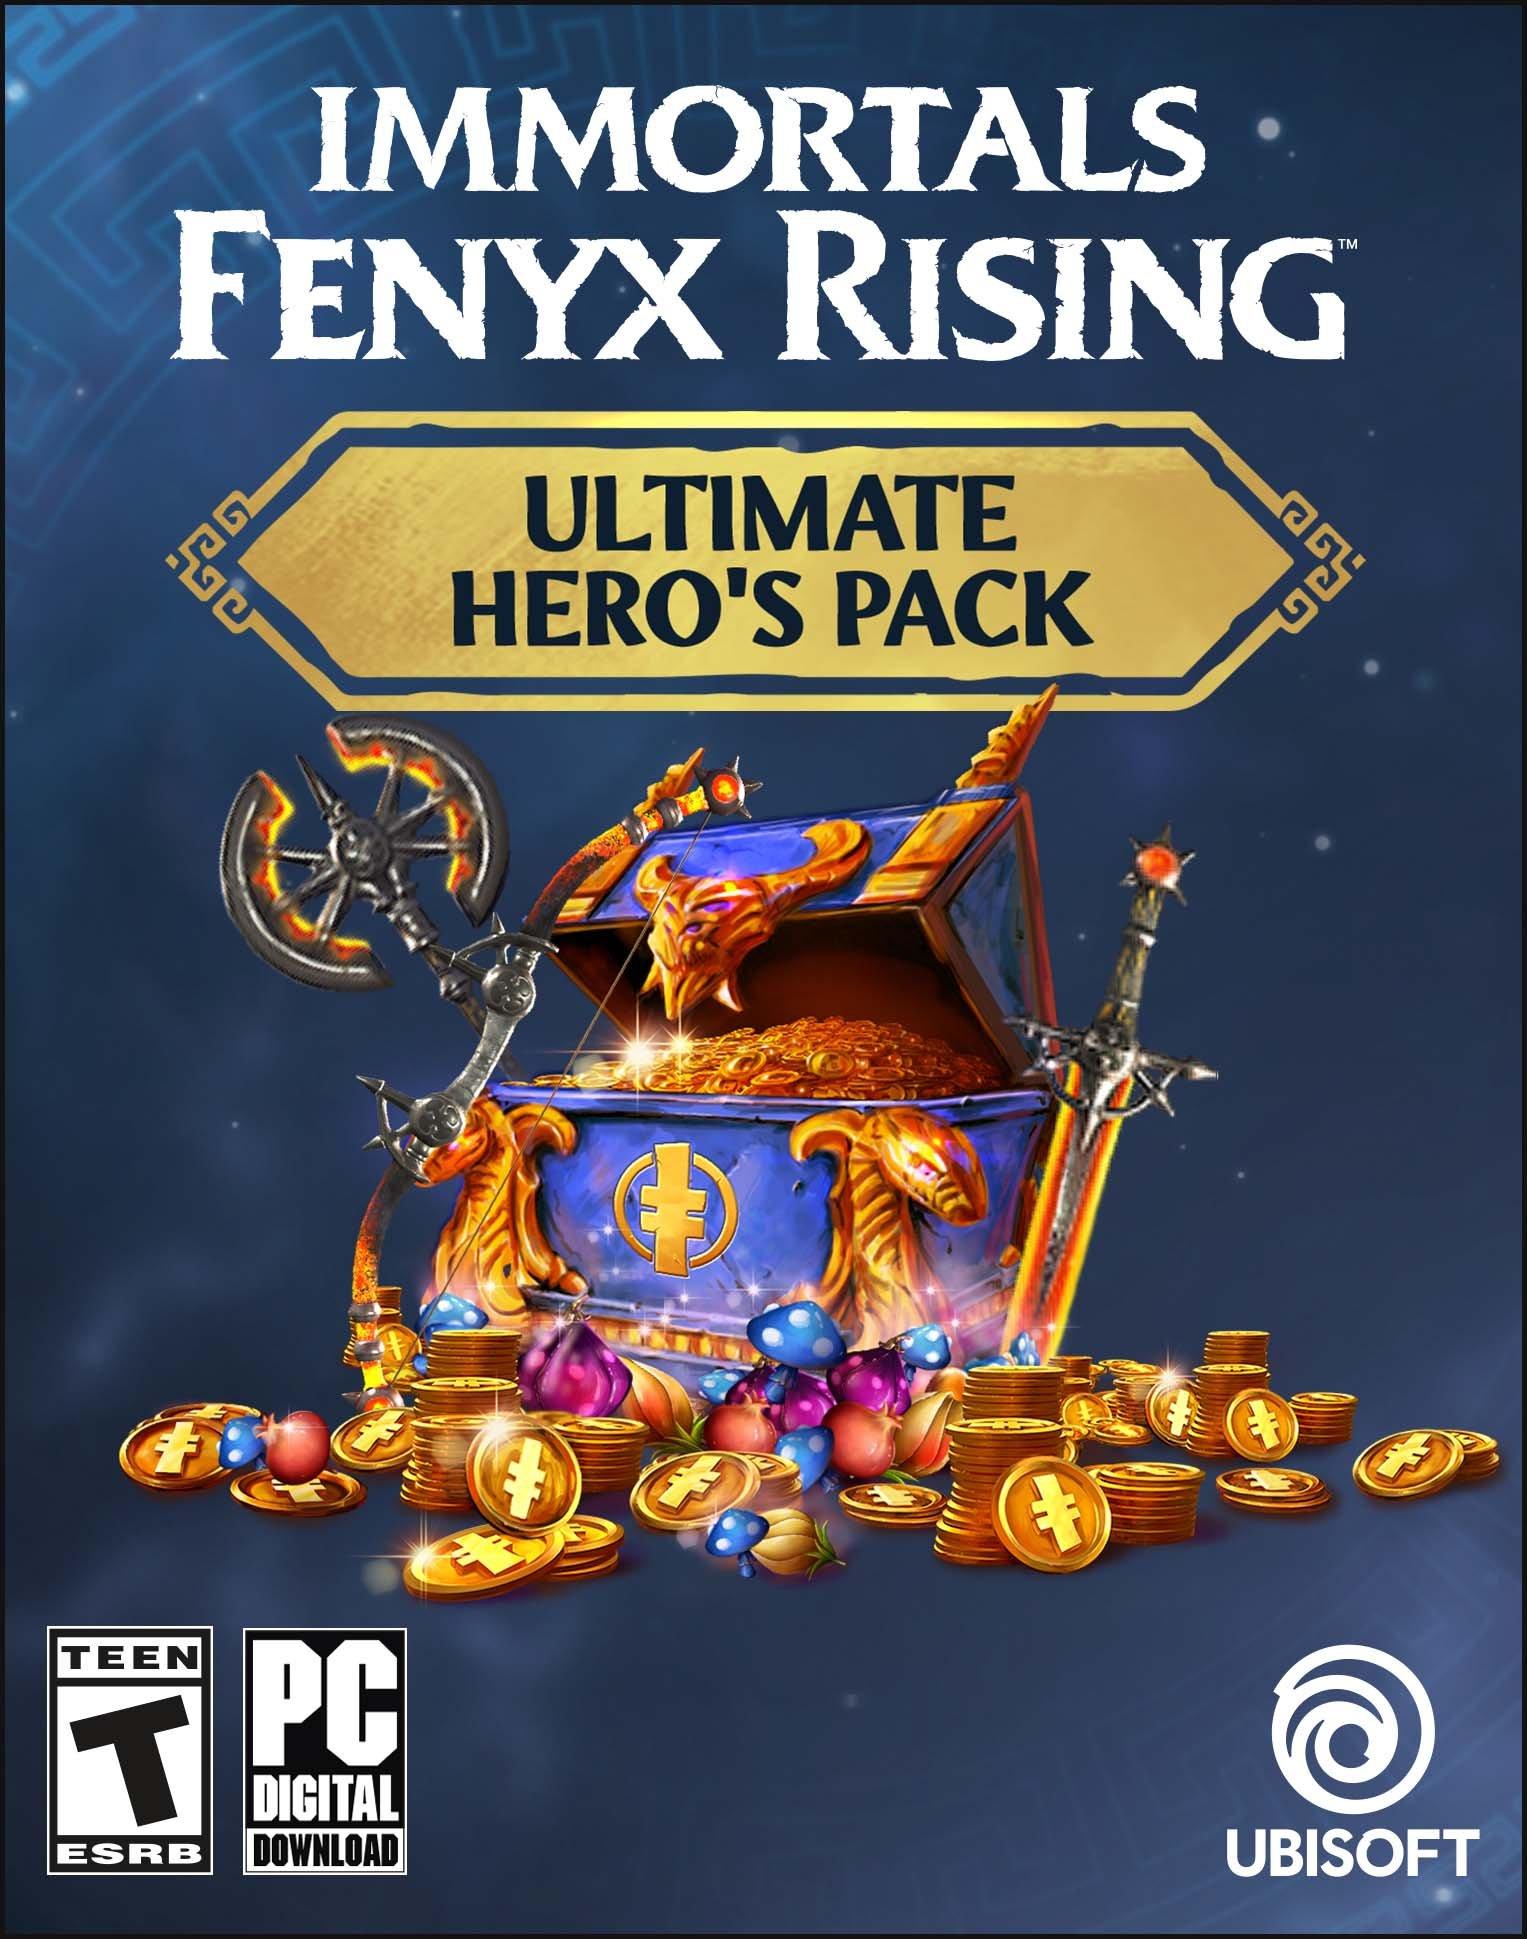 Immortals Fenyx Rising: Ultimate Hero's Pack DLC - PC Ubisoft